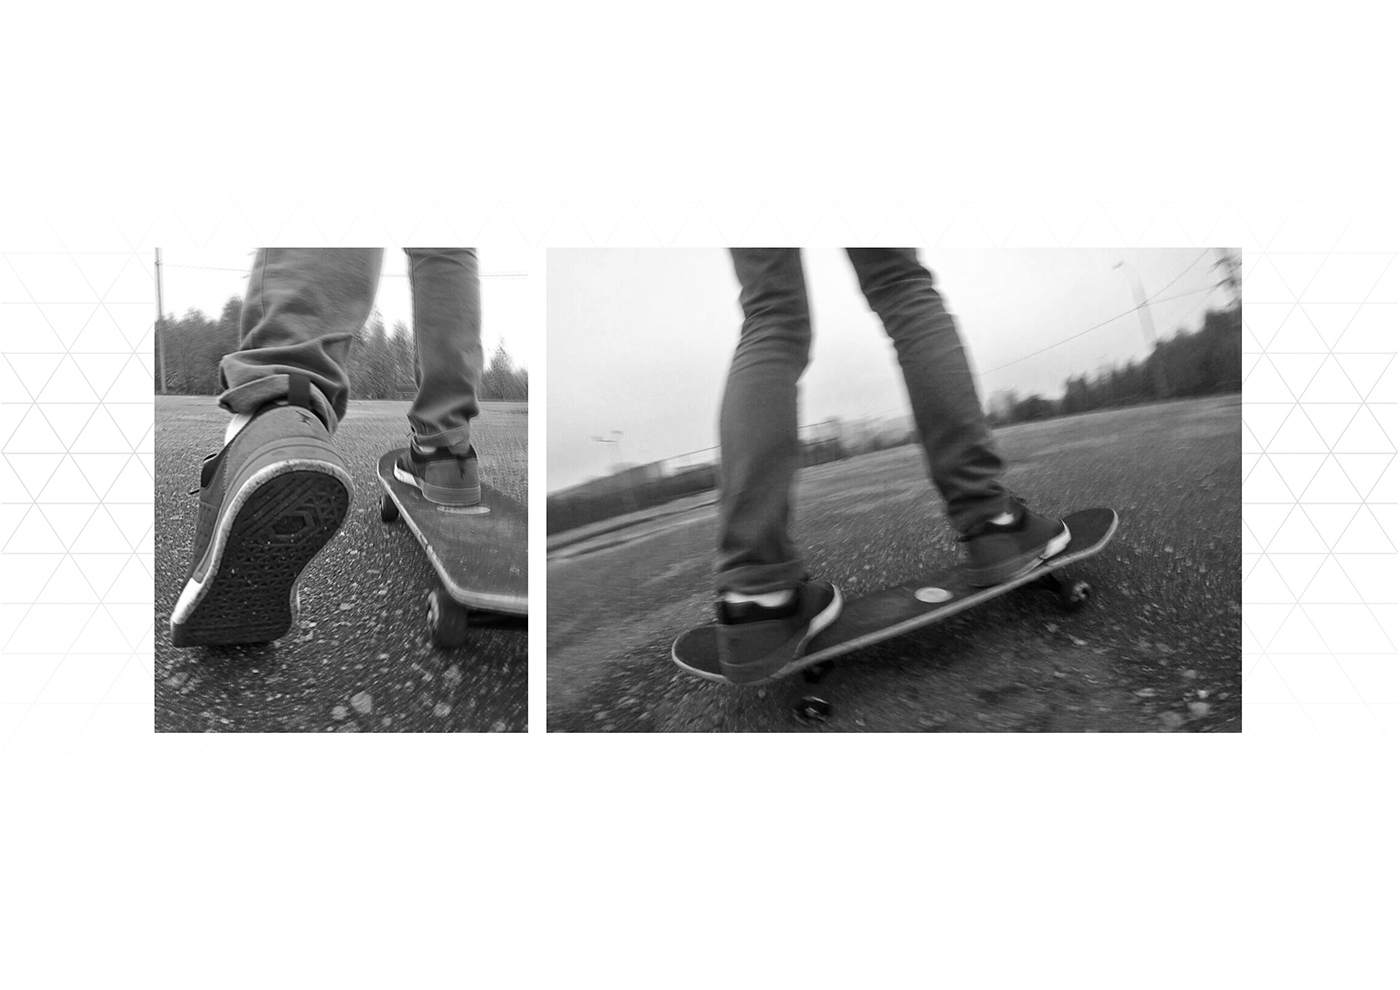 footwear shoes sneakers skate skateboarding NikeSB skateshoes Vans dc кроссовки